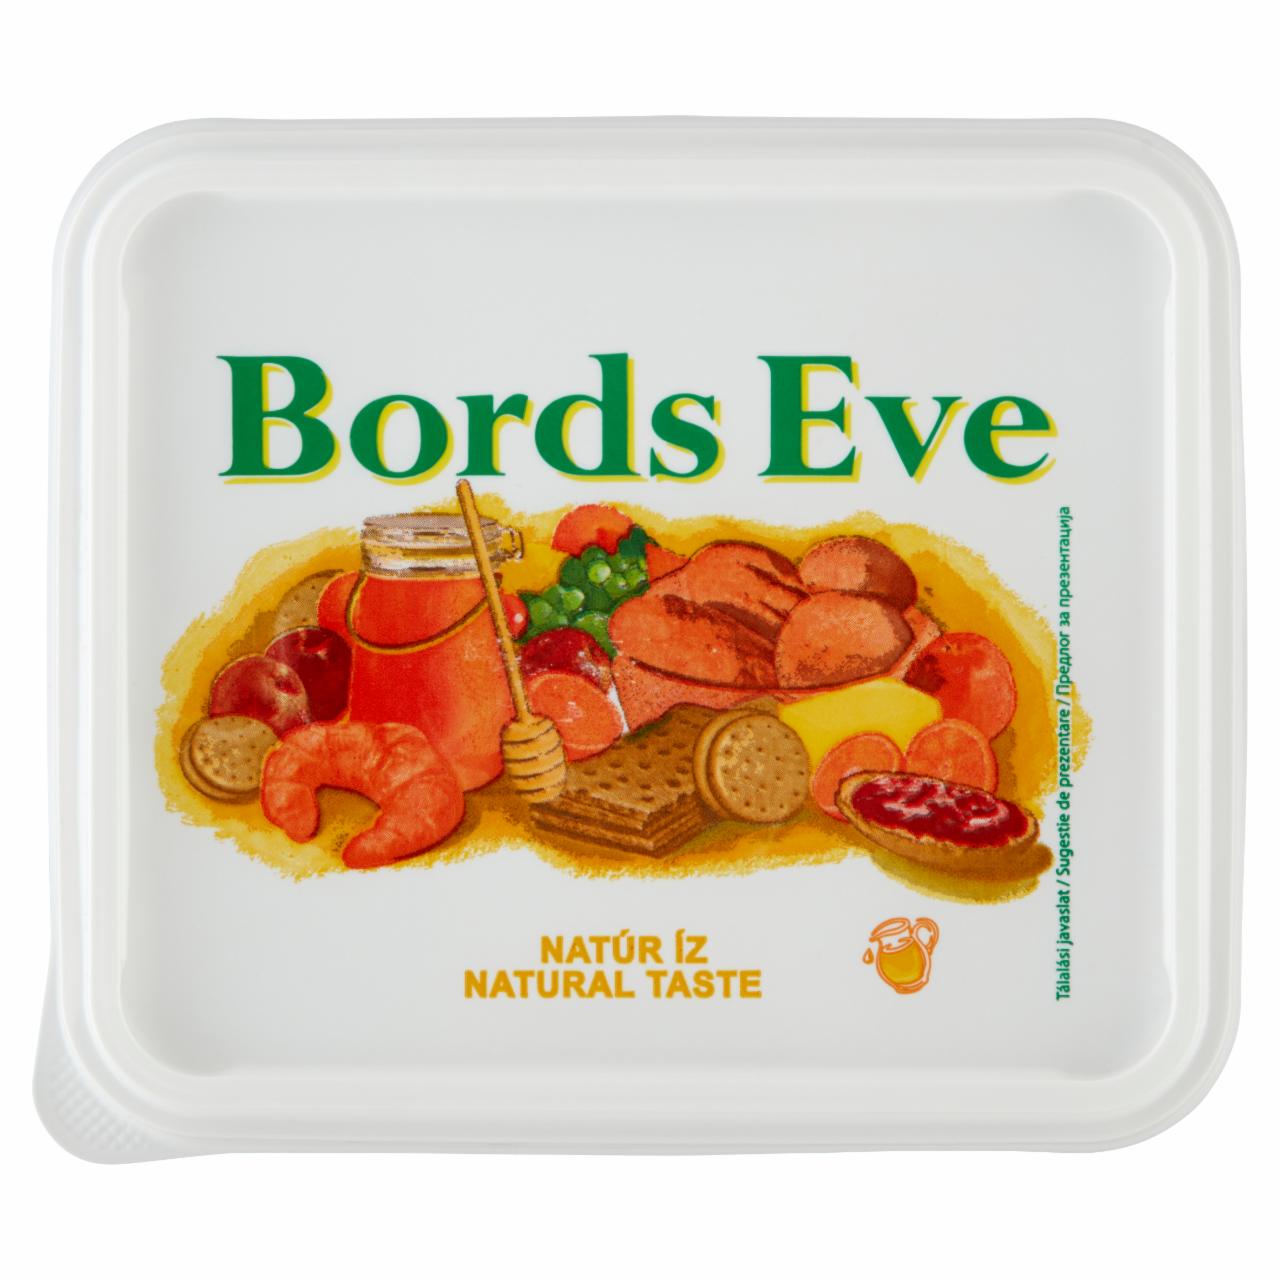 Képek - Bords Eve natúr, csökkentett zsírtartalmú margarin 500 g